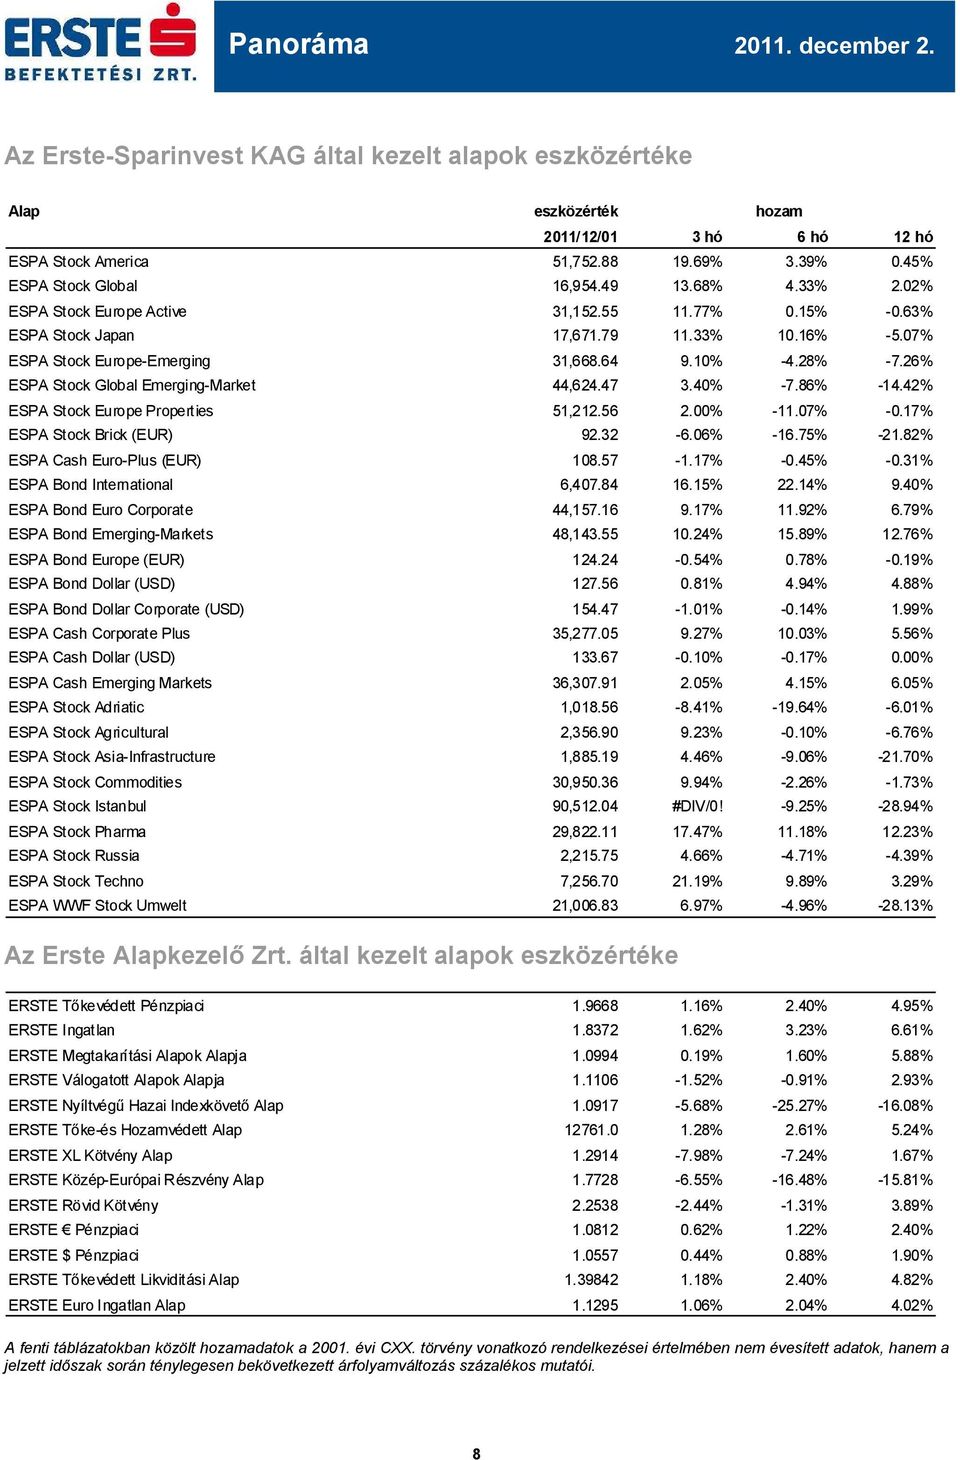 26% ESPA Stock Global Emerging-Market 44,624.47 3.4% -7.86% -14.42% ESPA Stock Europe Properties 51,212.56 2.% -11.7% -.17% ESPA Stock Brick (EUR) 92.32-6.6% -16.75% -21.